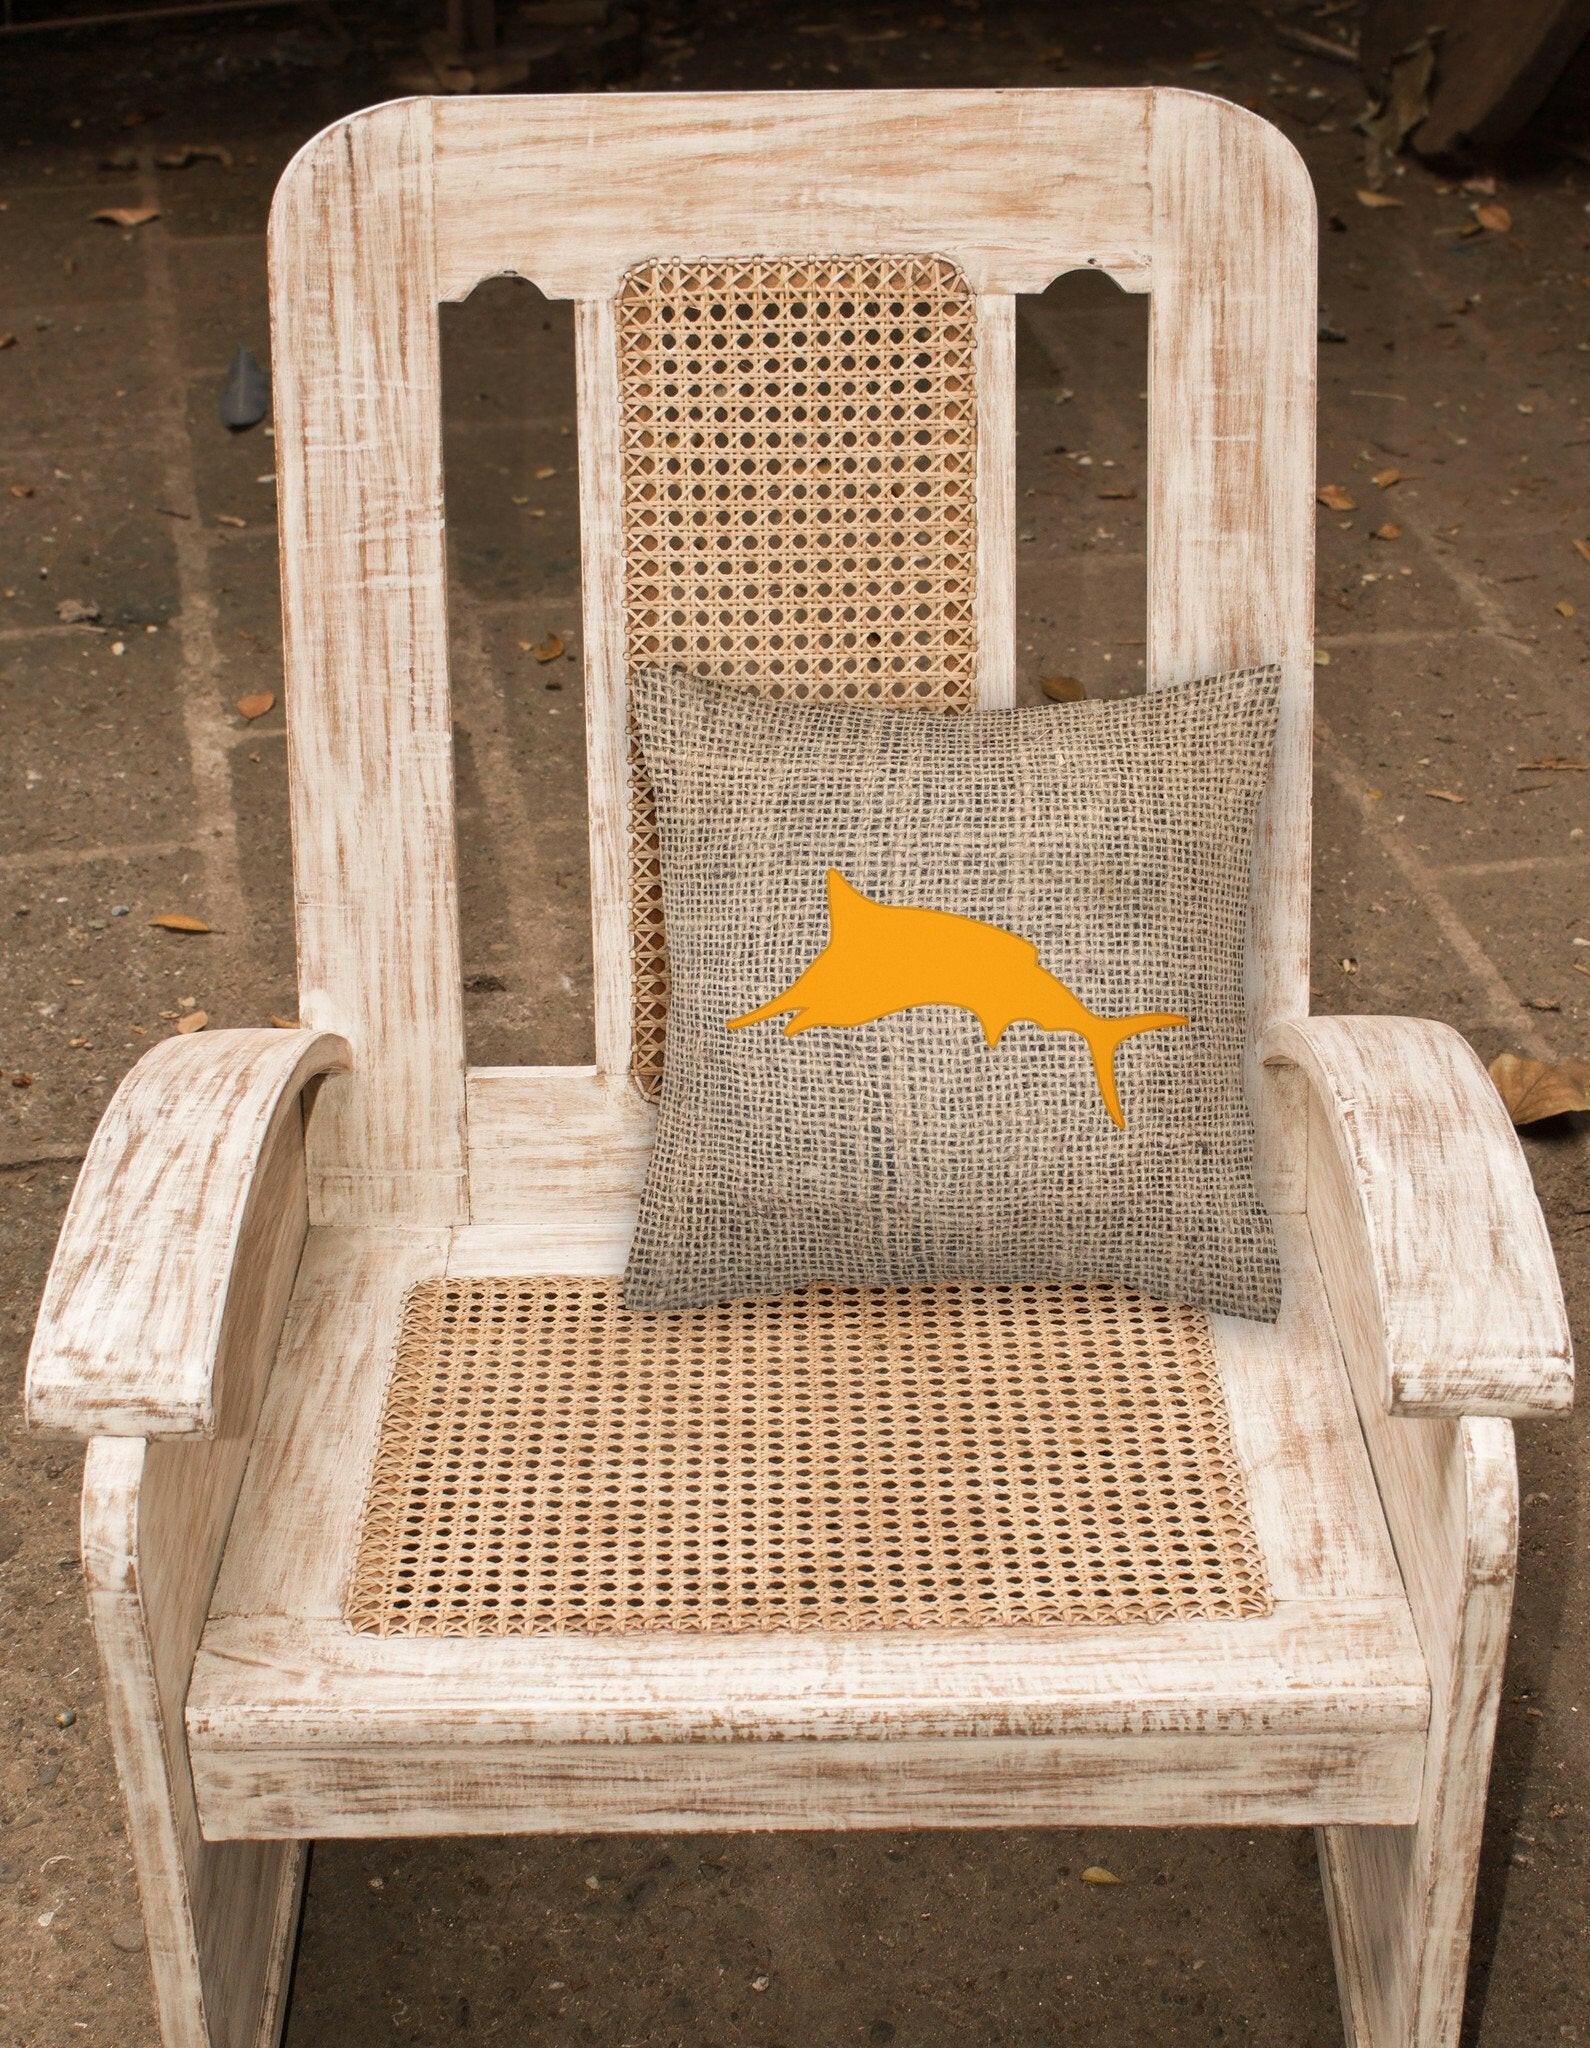 Fish - Marlin Burlap and Orange   Canvas Fabric Decorative Pillow BB1026 - the-store.com